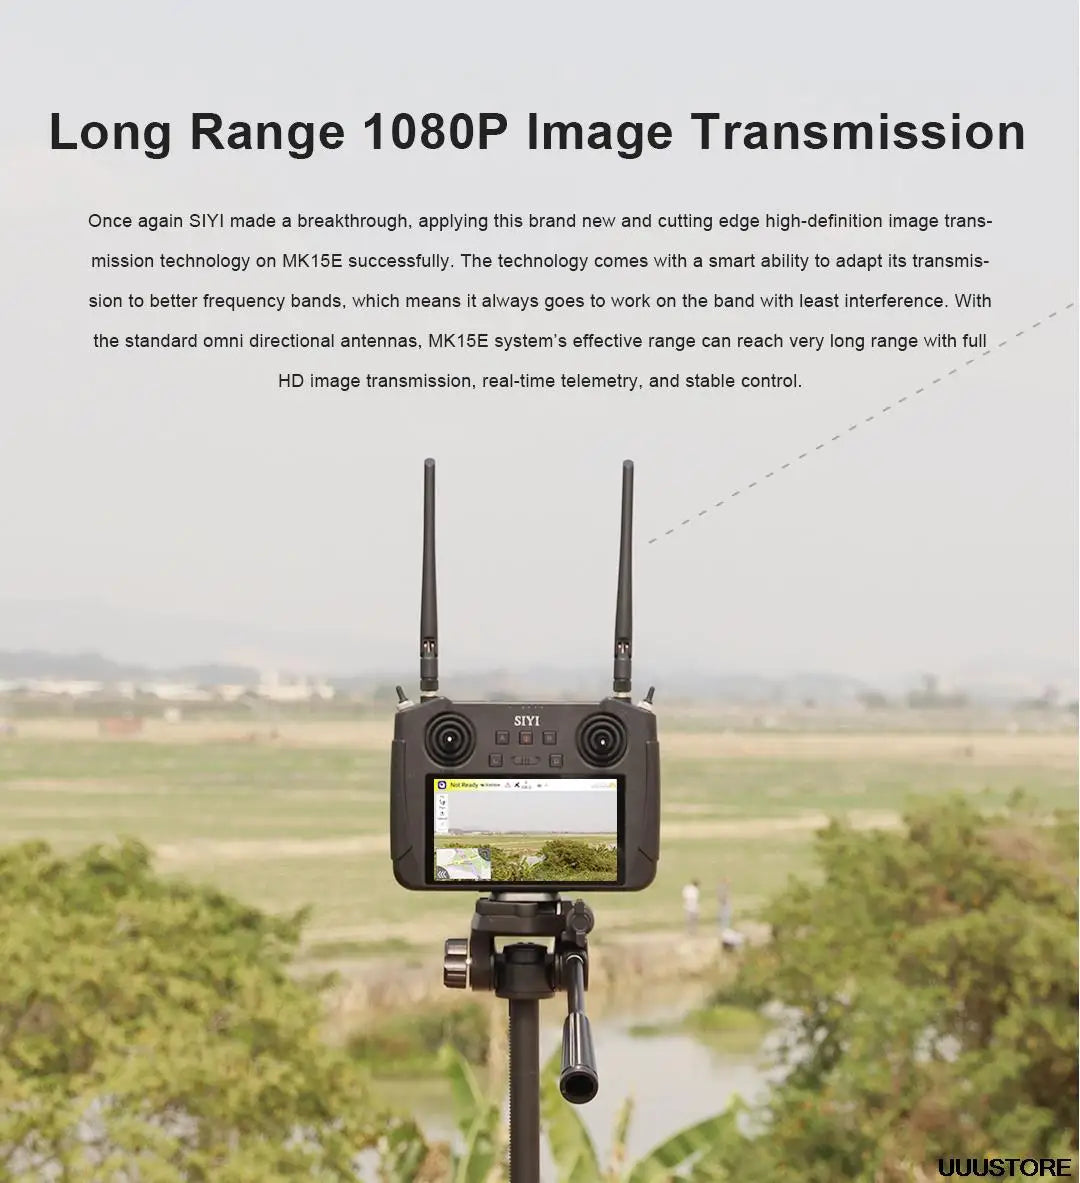 SIYI MK15E Transmitter, SIYI Kalli's long-range 108OP Image Transmission is a